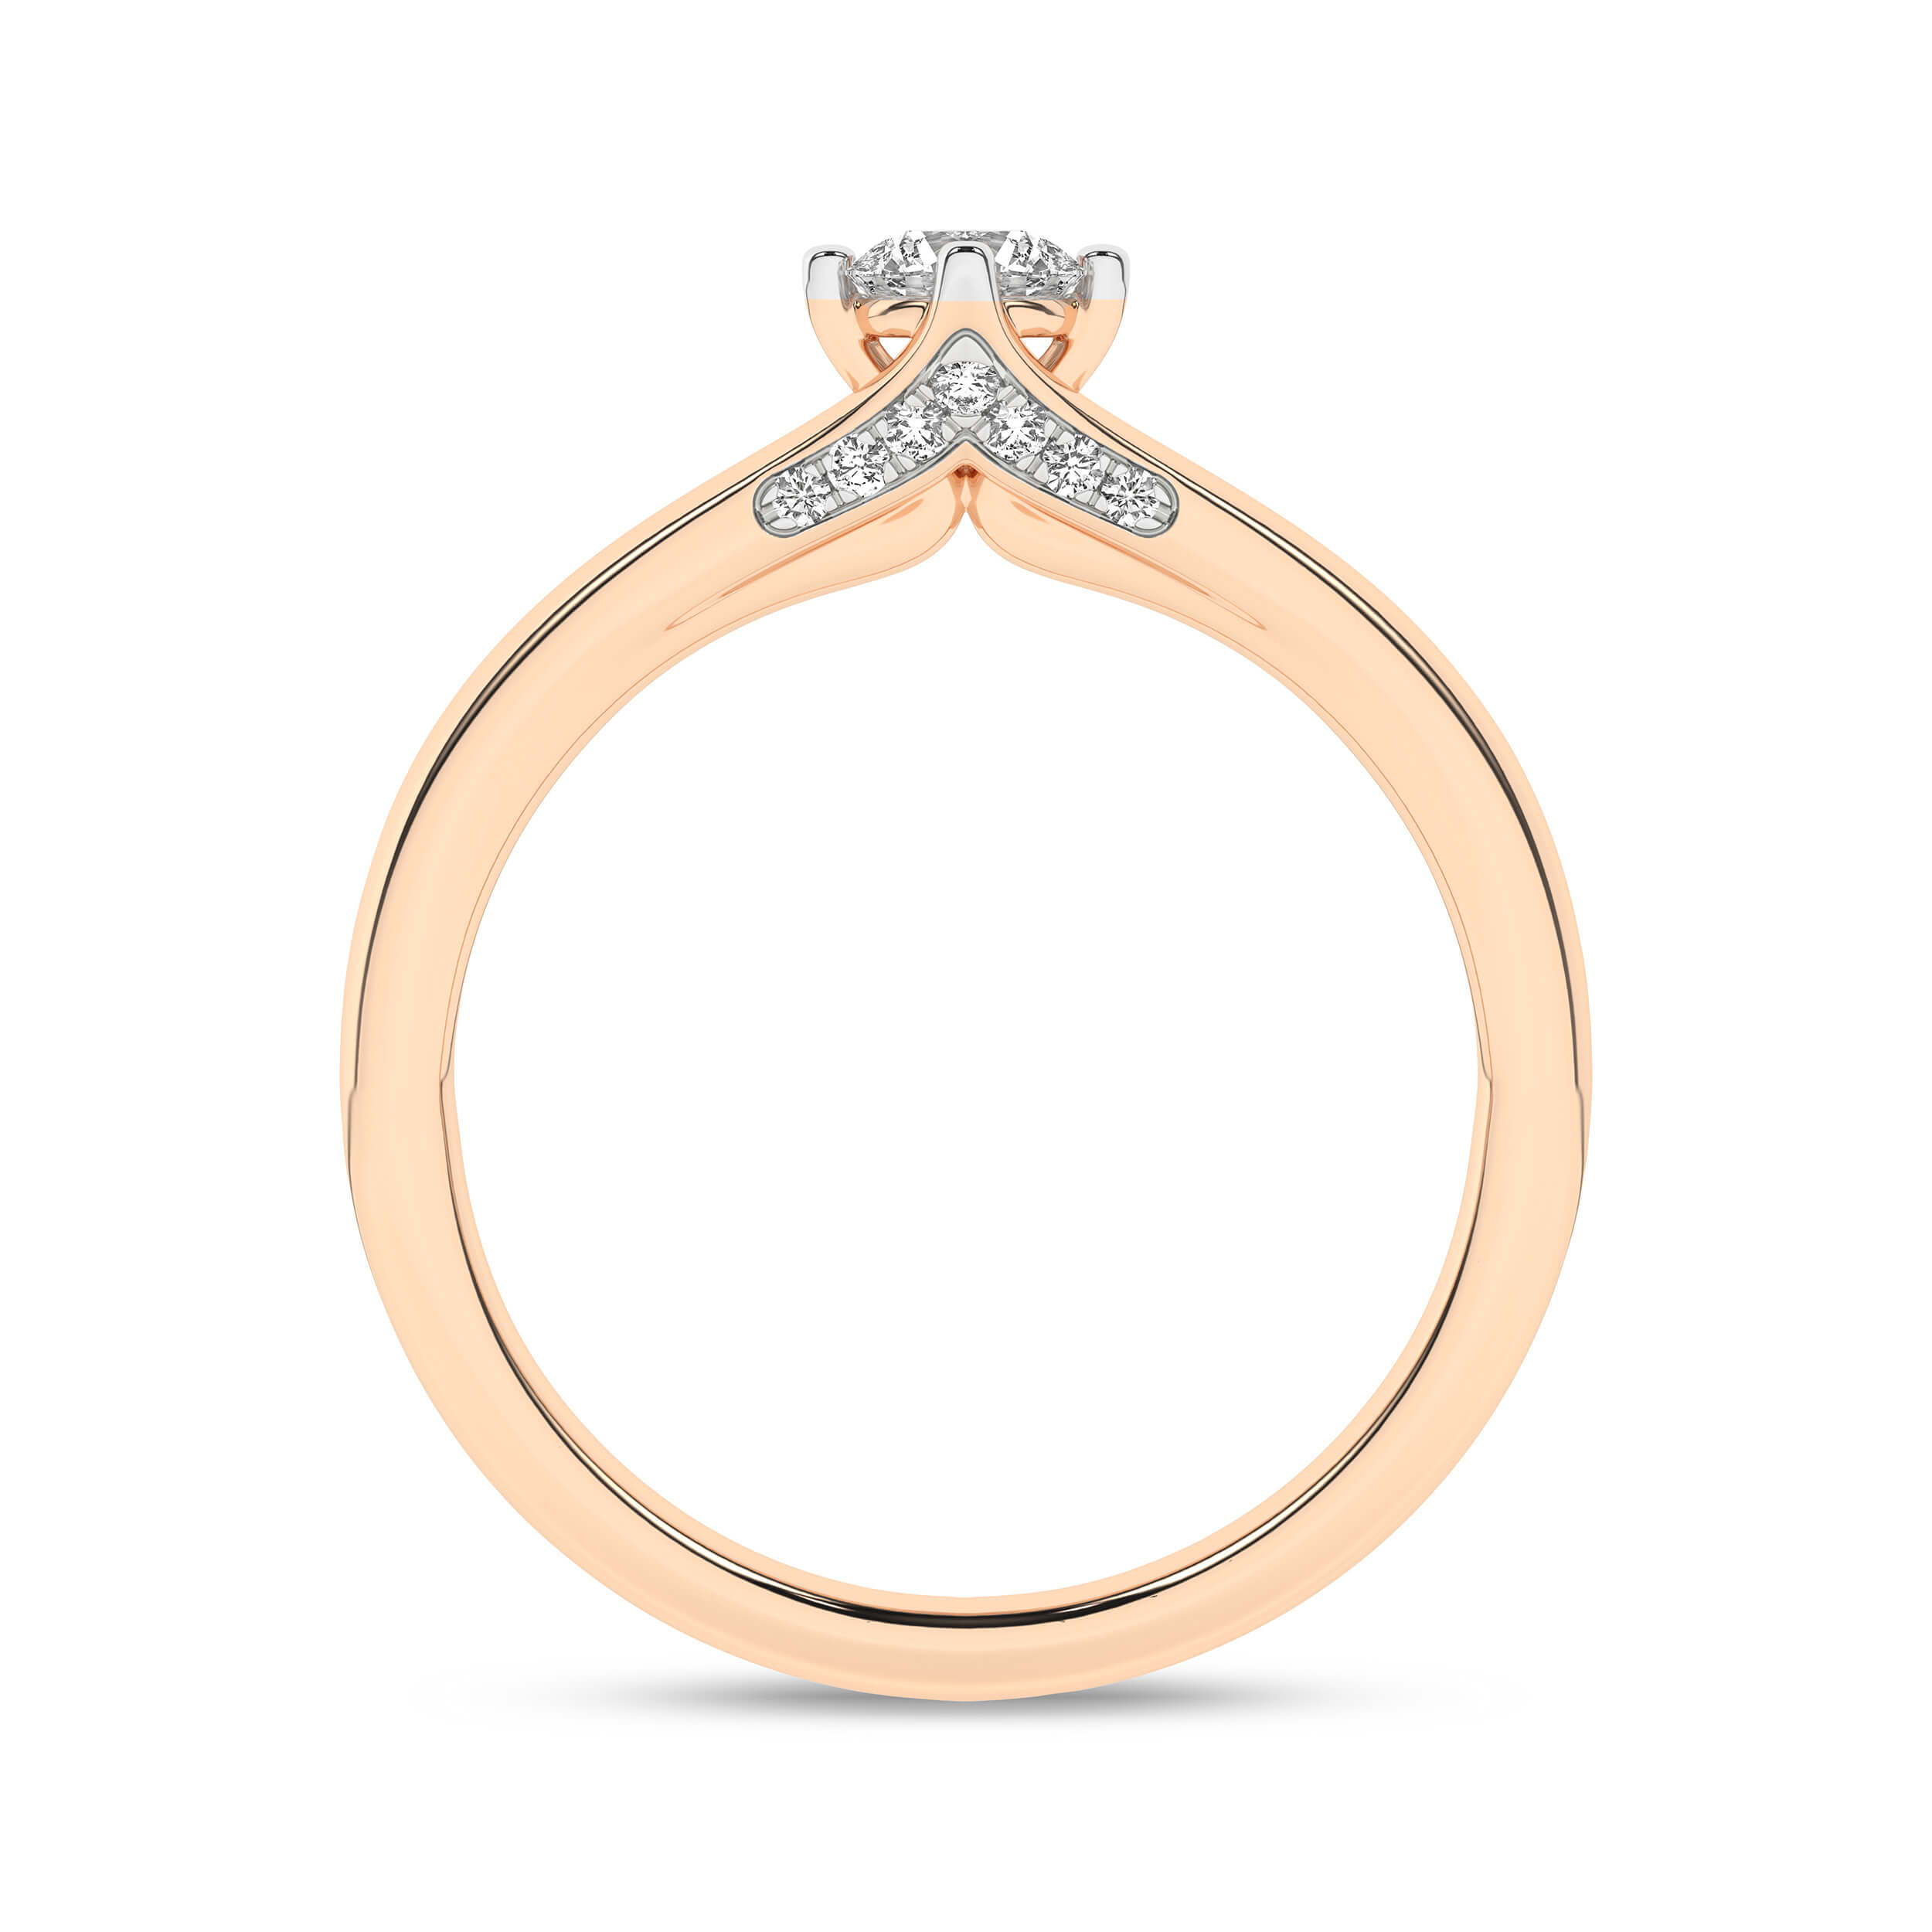 Inel de logodna din Aur Roz 14K cu Diamant 0.25Ct, articol RS0863, previzualizare foto 2